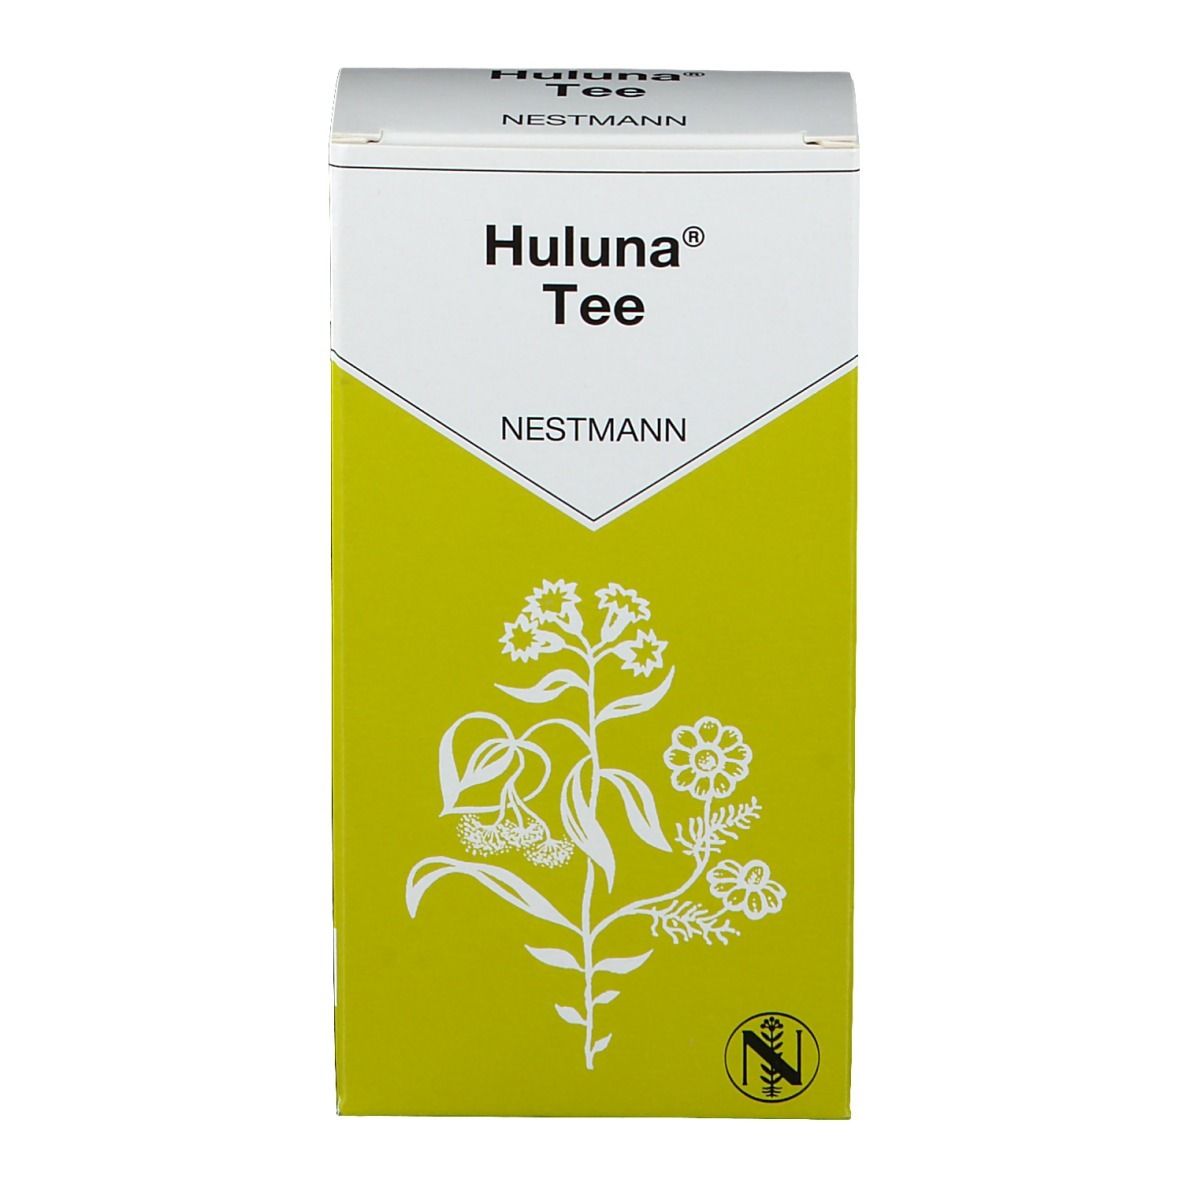 HULUNA Tee Nestmann